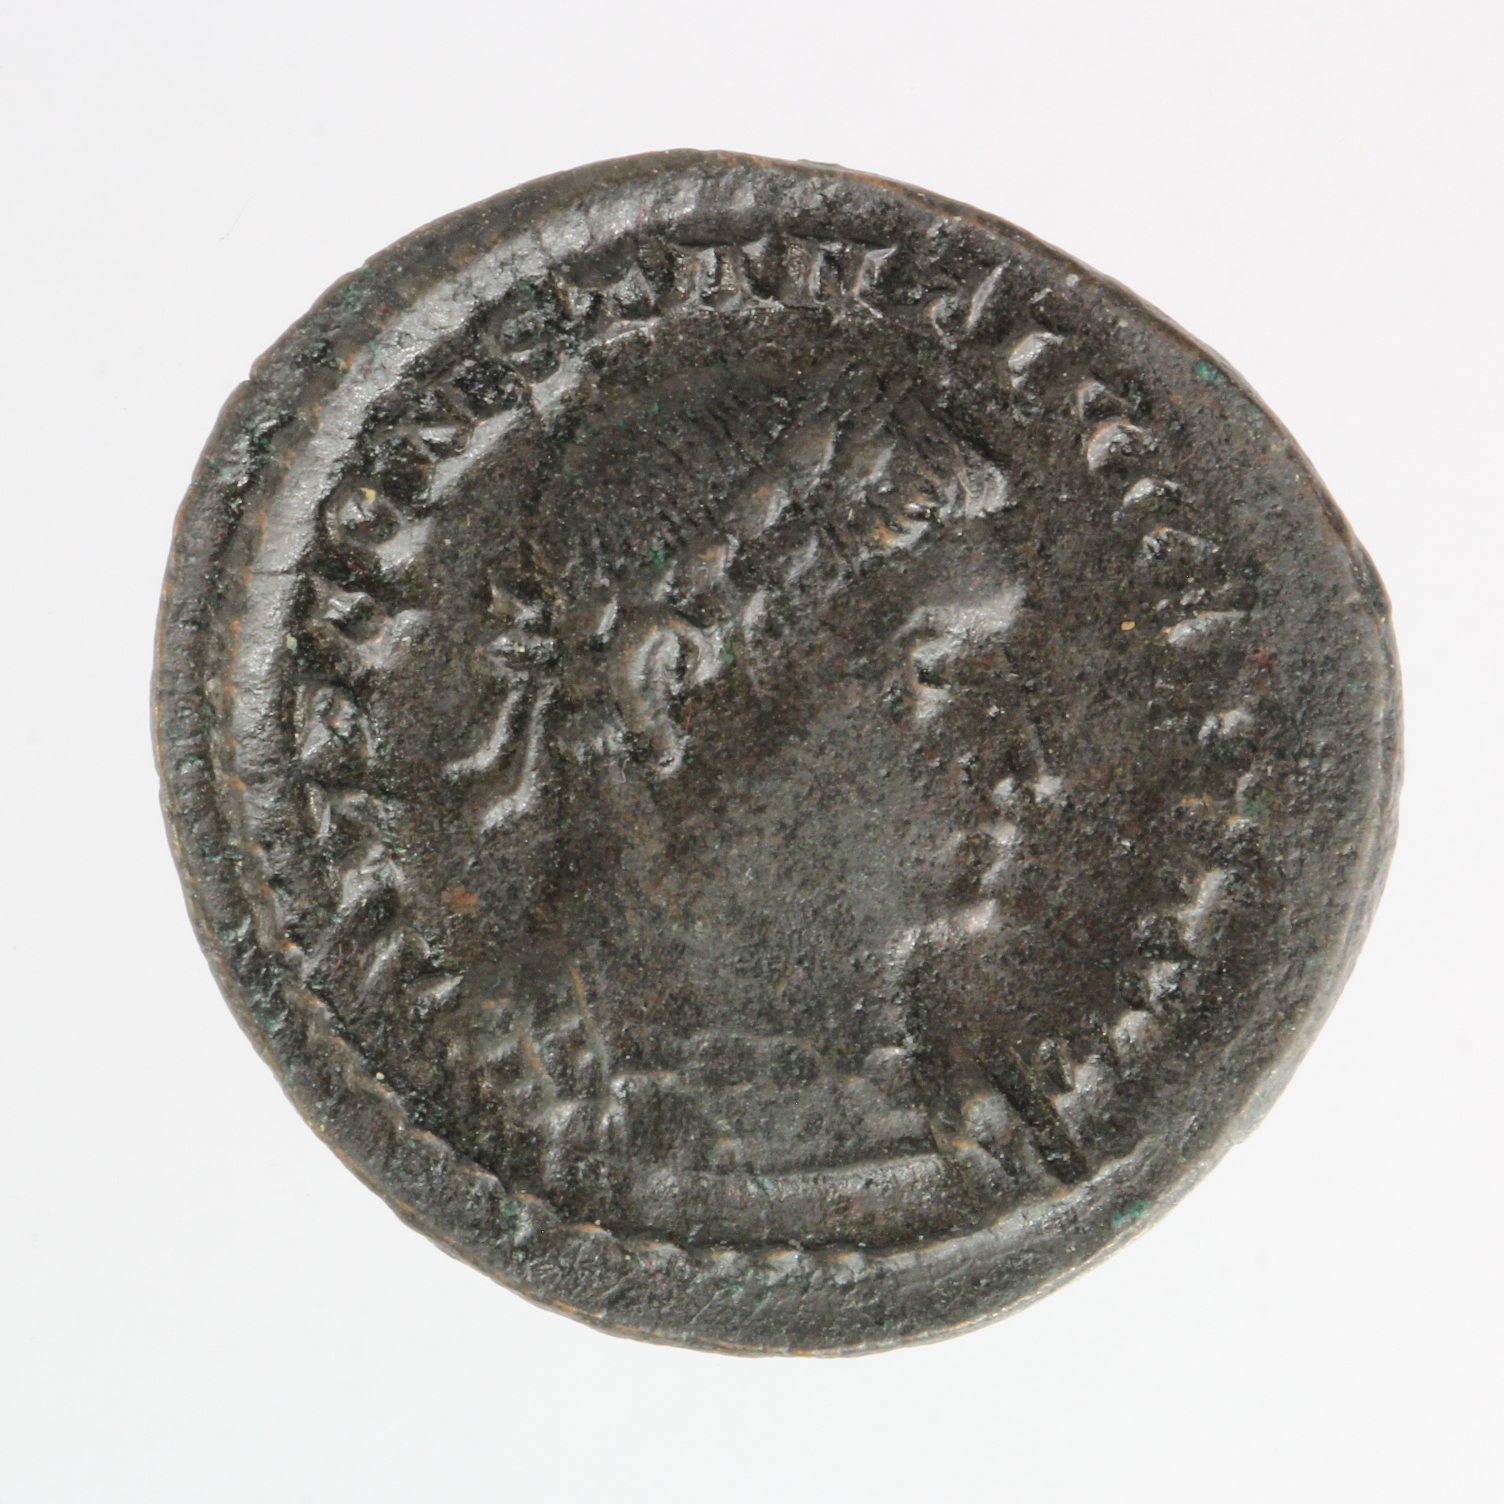 Constantine I the Great 307-337 A.D., billon follis of the London Mint, 310 A.D., obverse:-